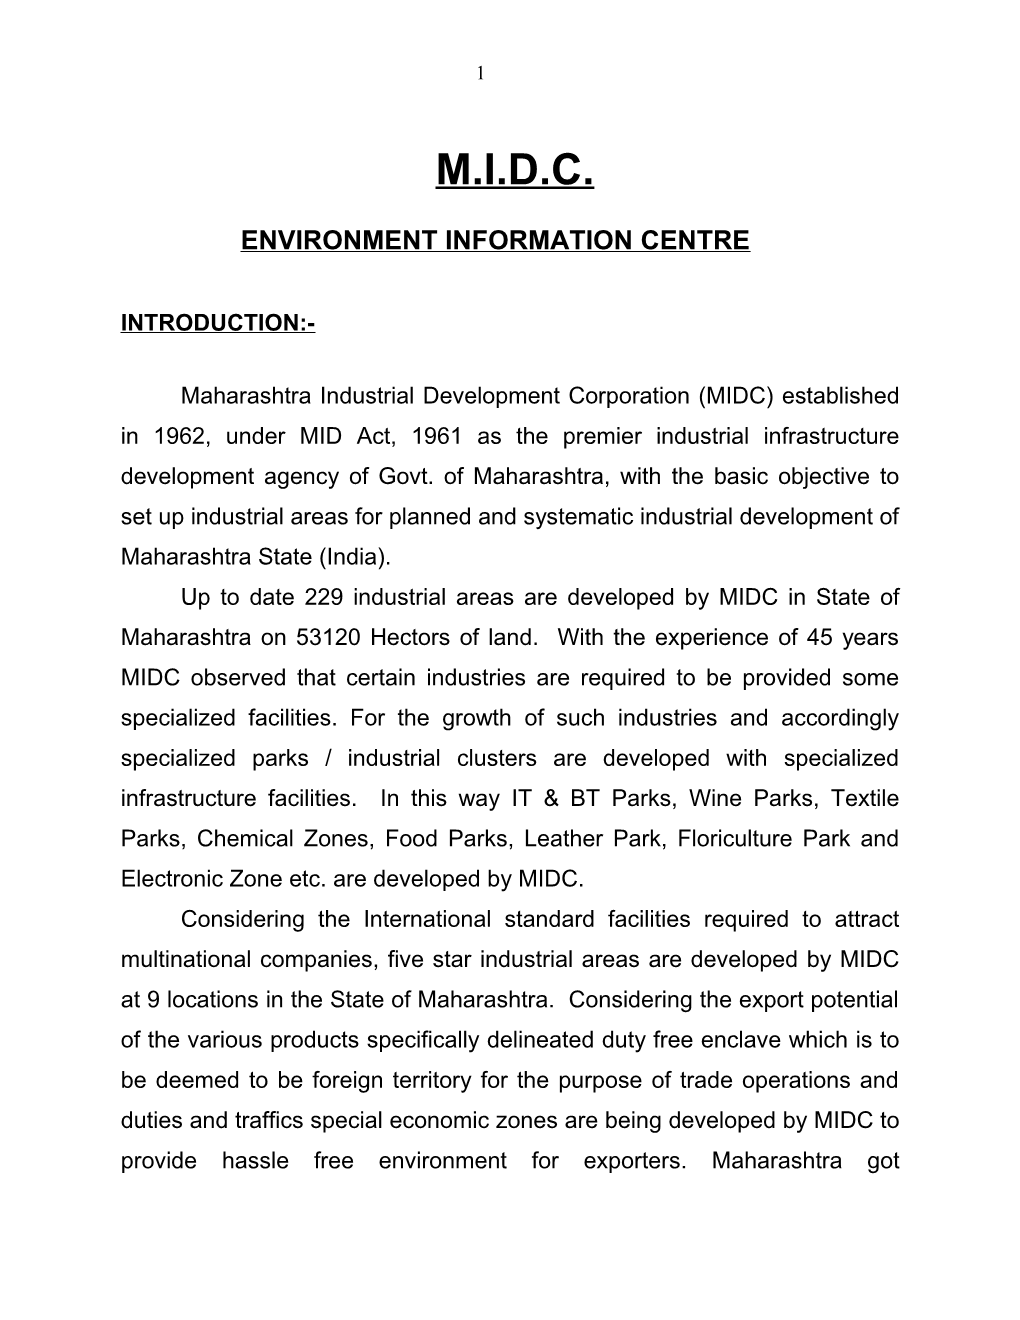 Environment Infiormation Centre